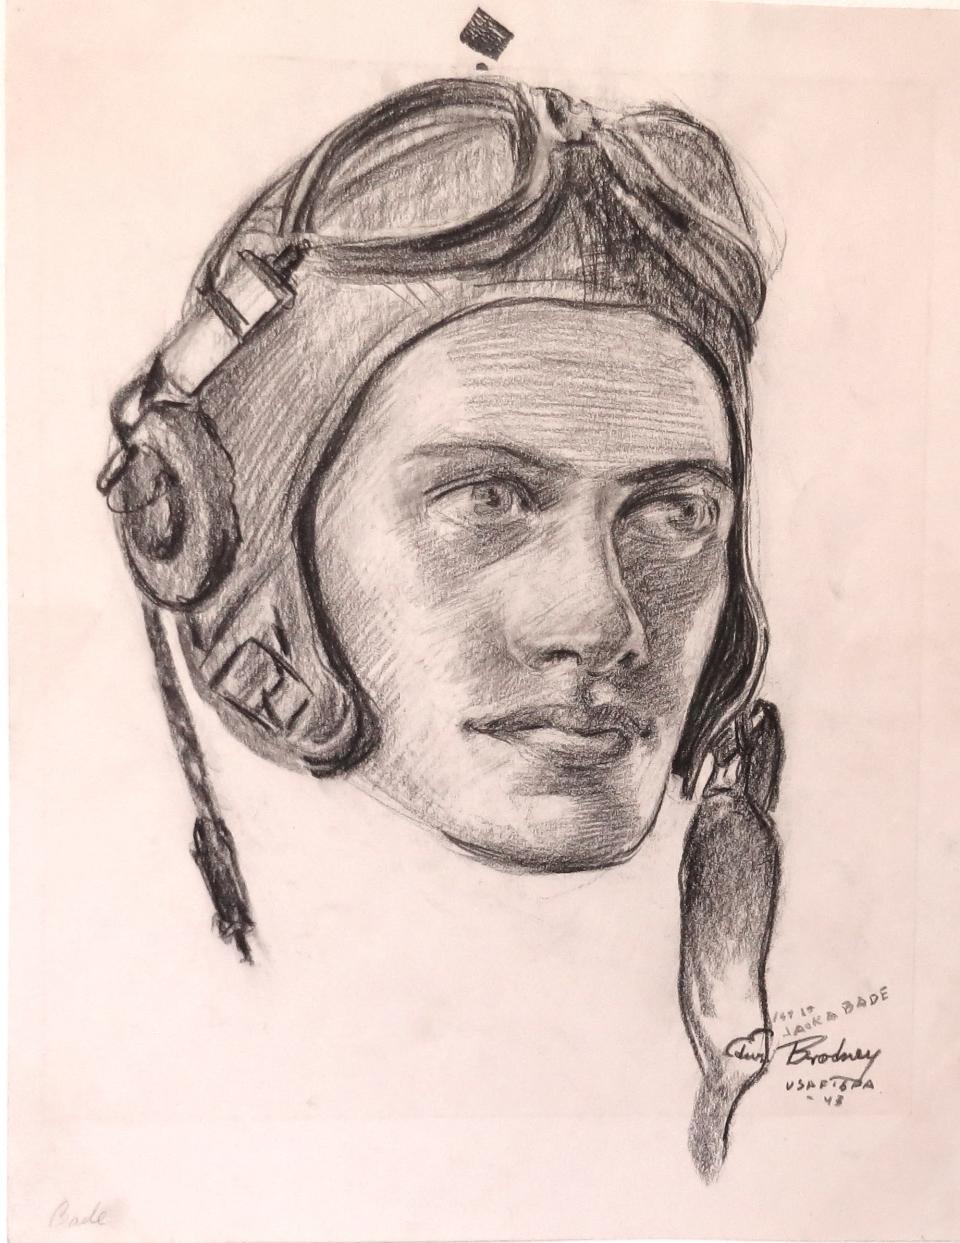 Edward Brodney was a World War II military artist.